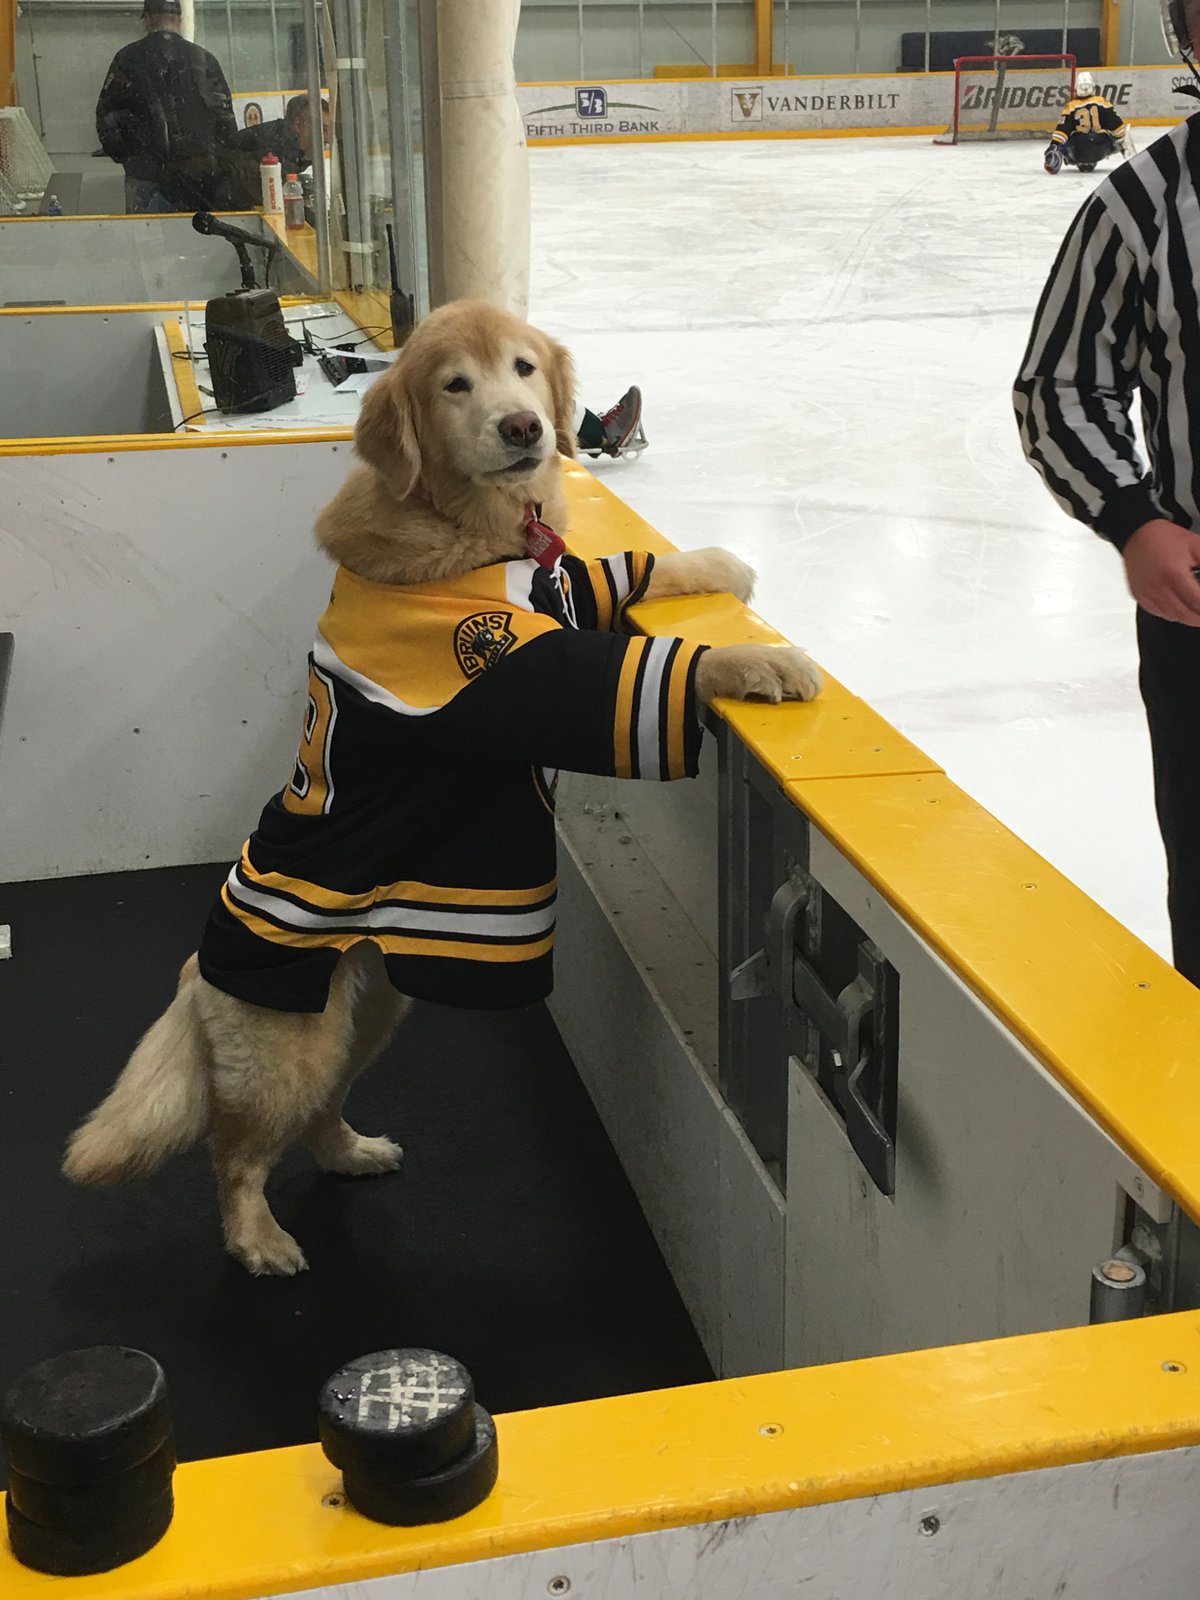 Boston Bruins NHL Dog Jersey